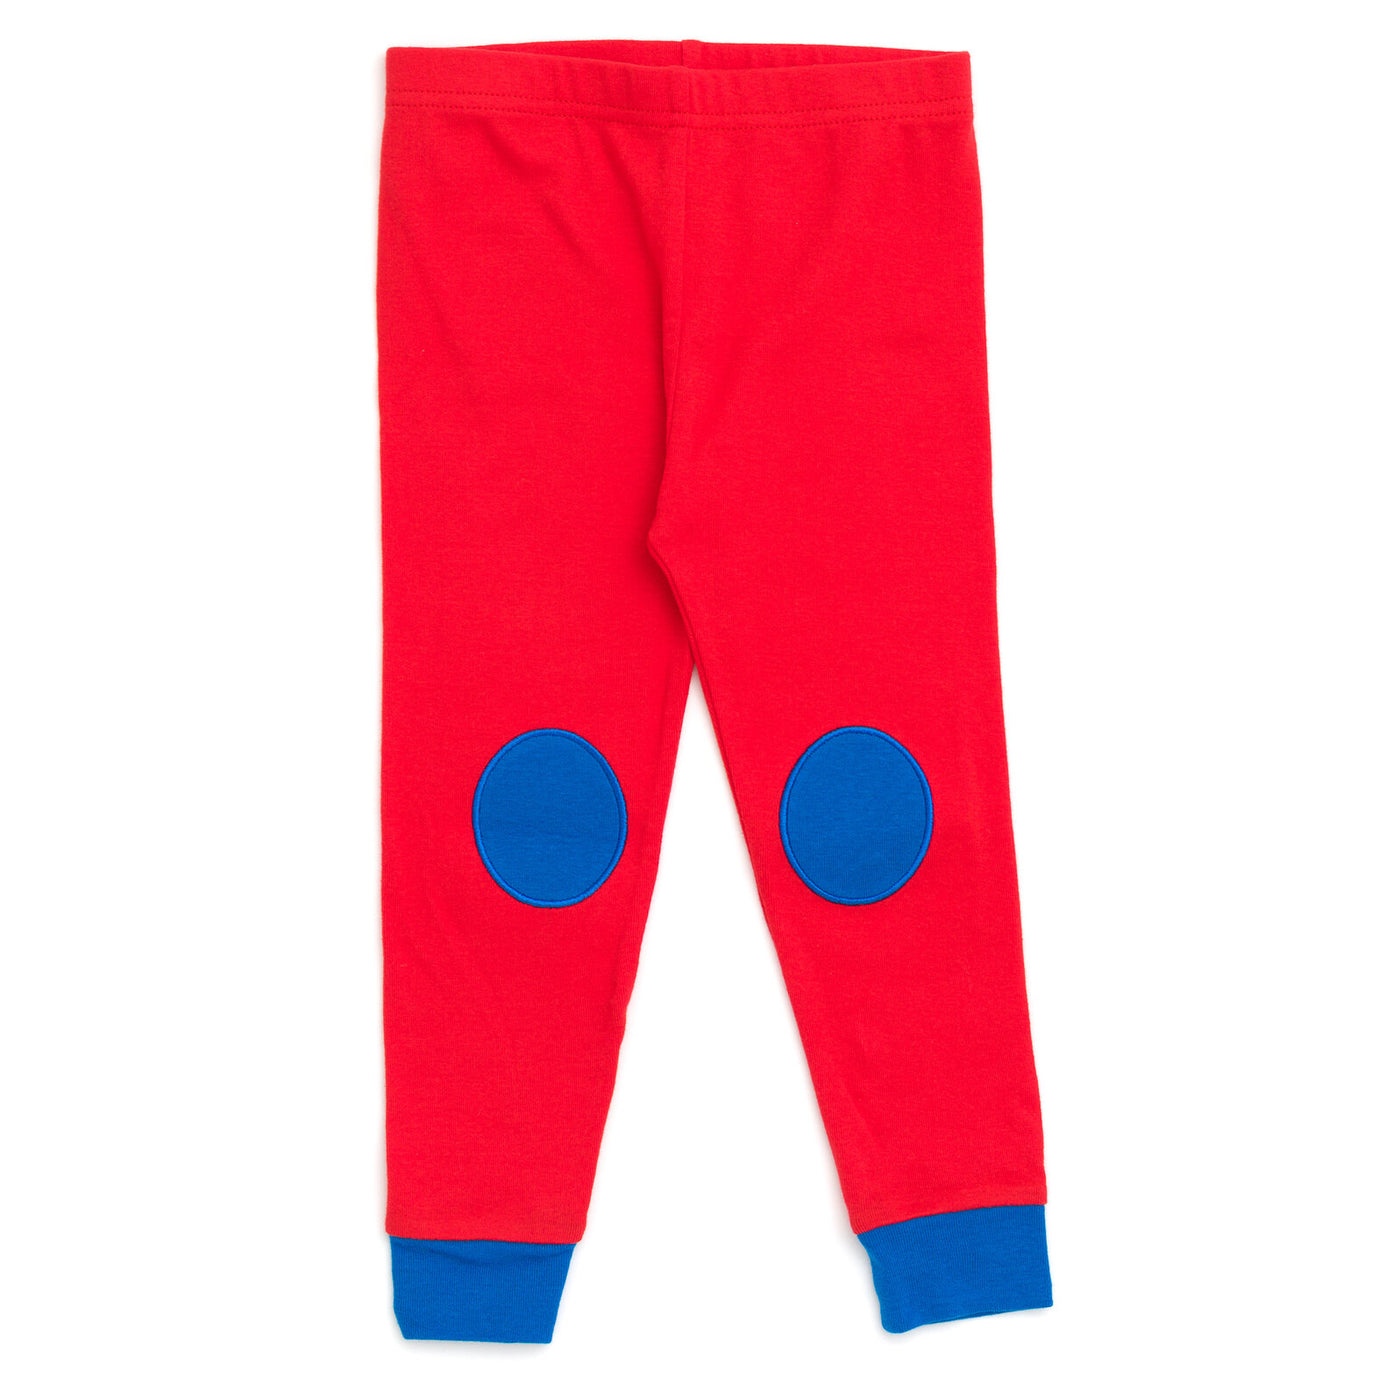 SUPER MARIO Nintendo Mario Pajama Shirt and Pants Sleep Set